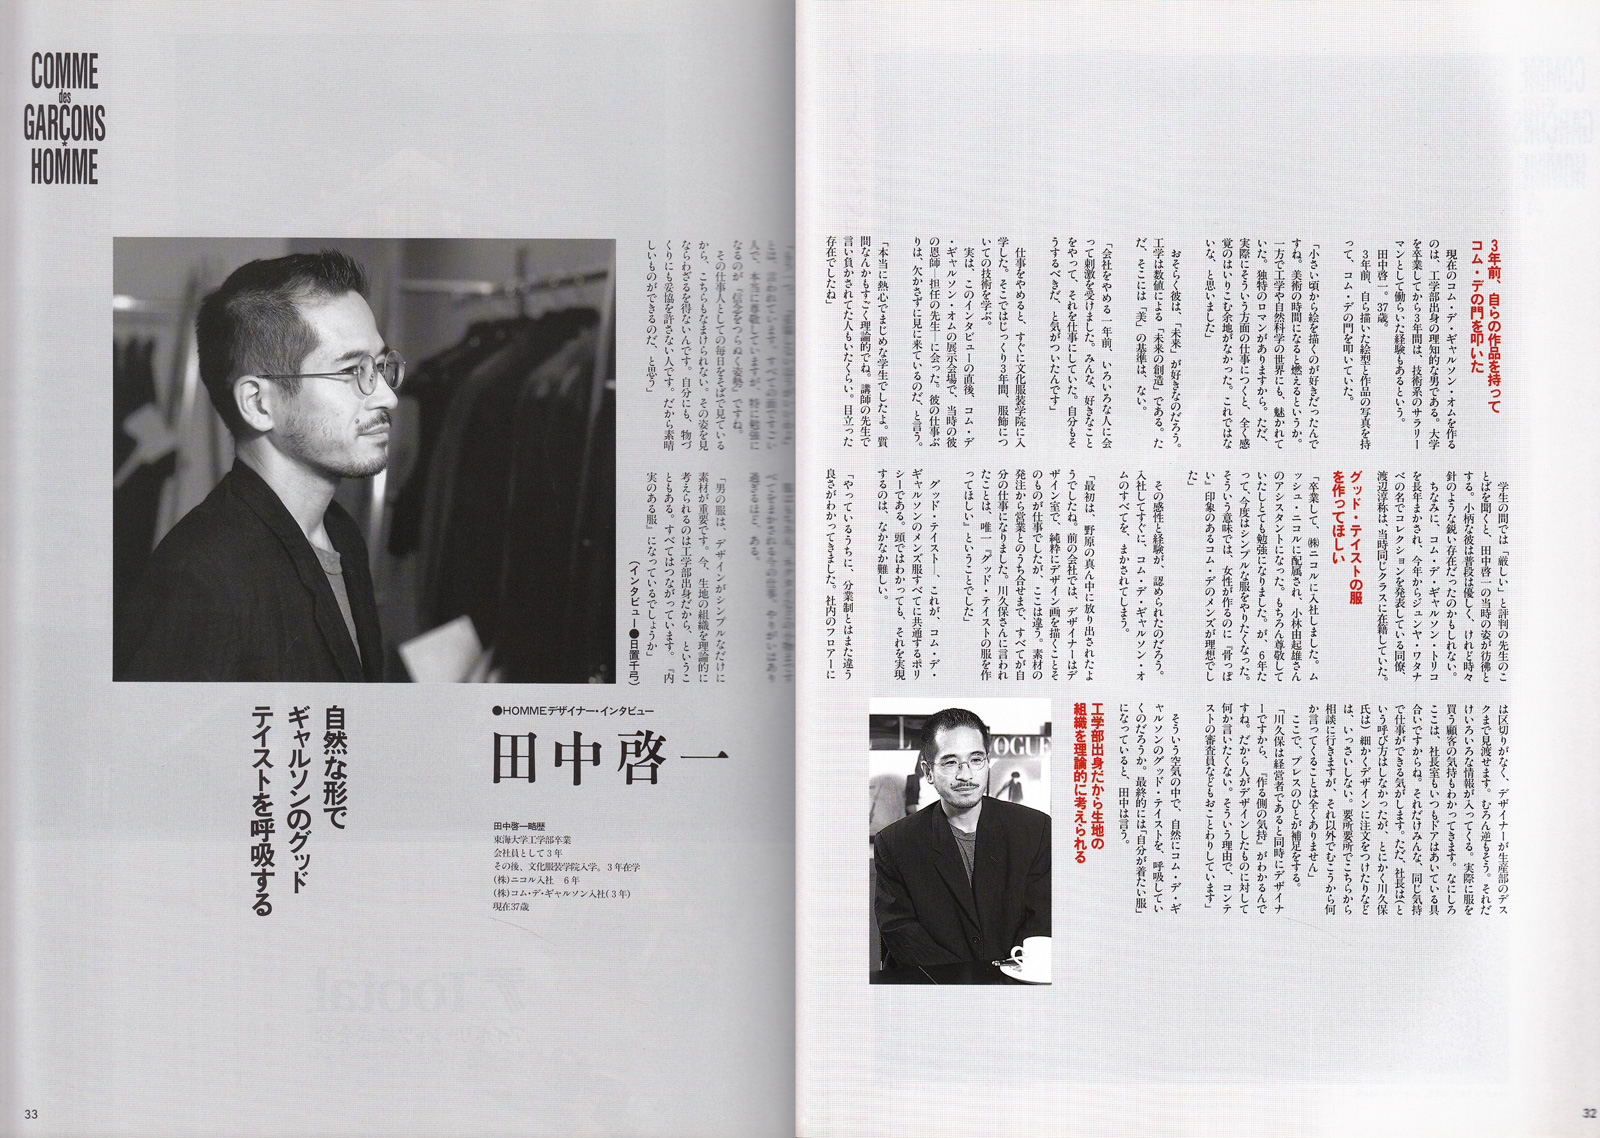 INTERVIEW：川久保玲, 田中啓一〈コムデギャルソン・オム物語〉1993 